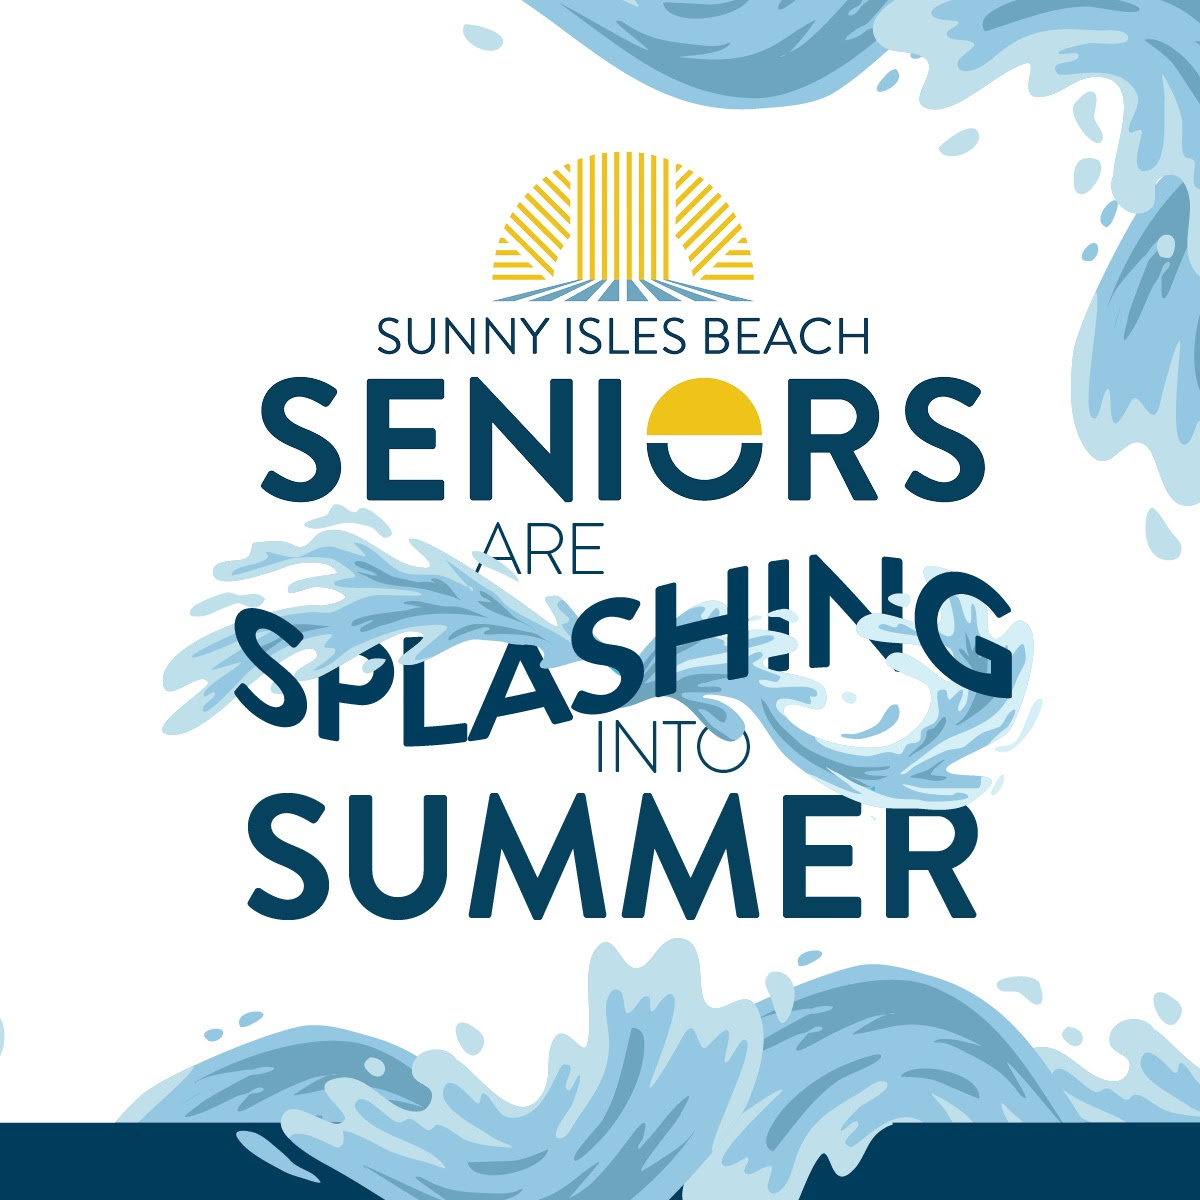 Sunny Isles Beach Seniors are Splashing into Summer